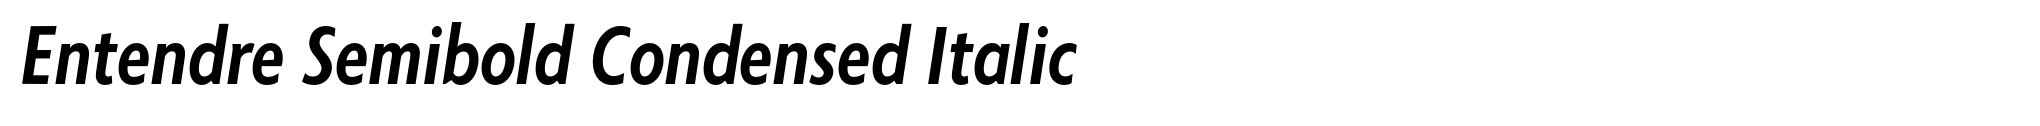 Entendre Semibold Condensed Italic image